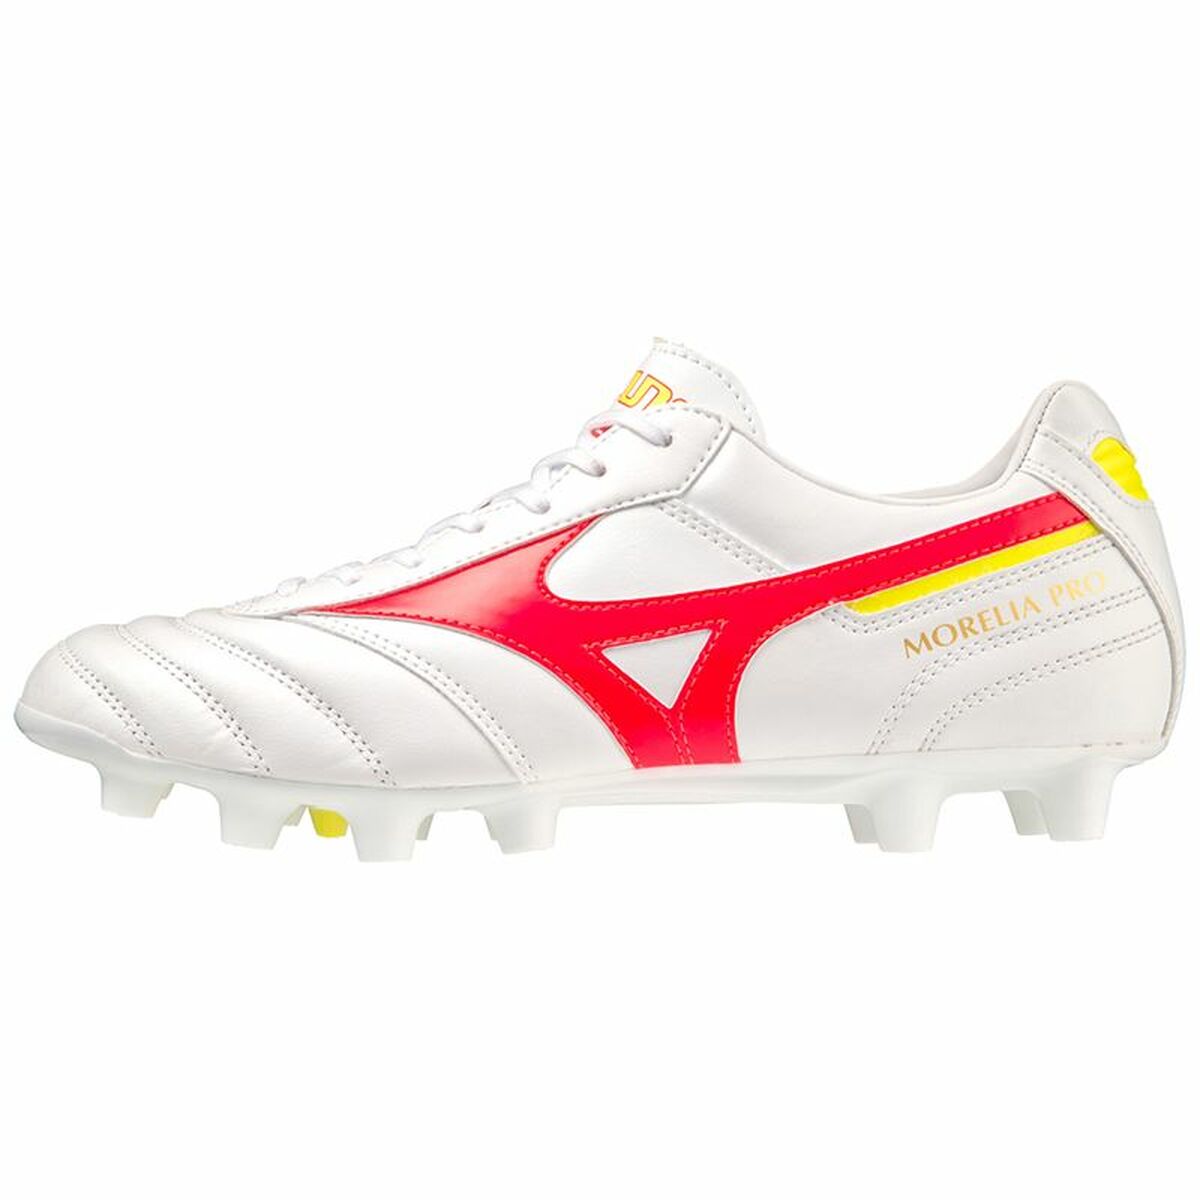 Chaussures de Football pour Adultes Mizuno Morelia II Pro Blanc